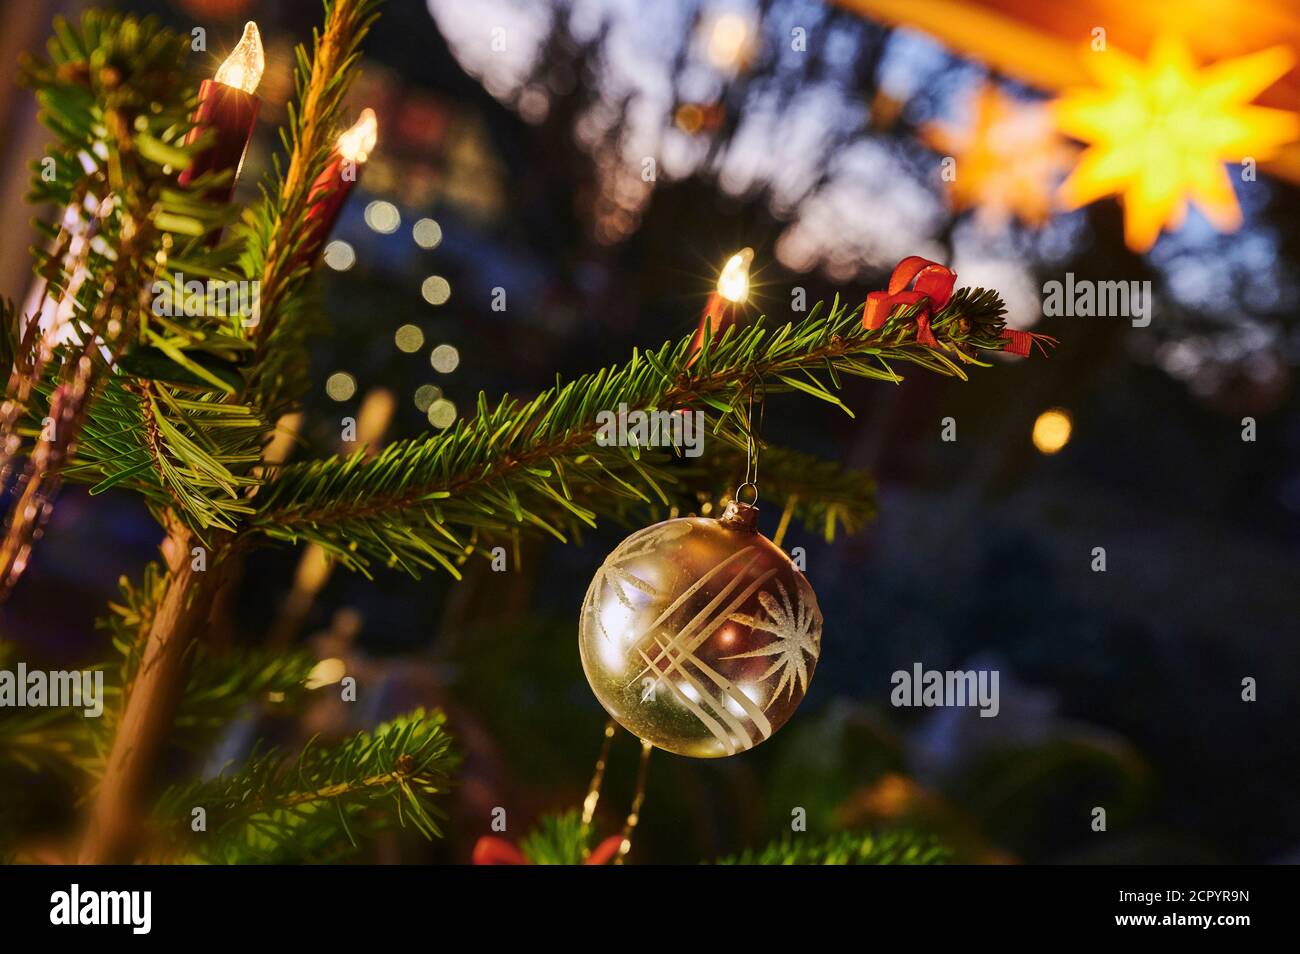 Christmas, Christmas custom, Christmas tree, fir branch, poinsettia, tree candles, dusk, blue hour, color contrast Stock Photo